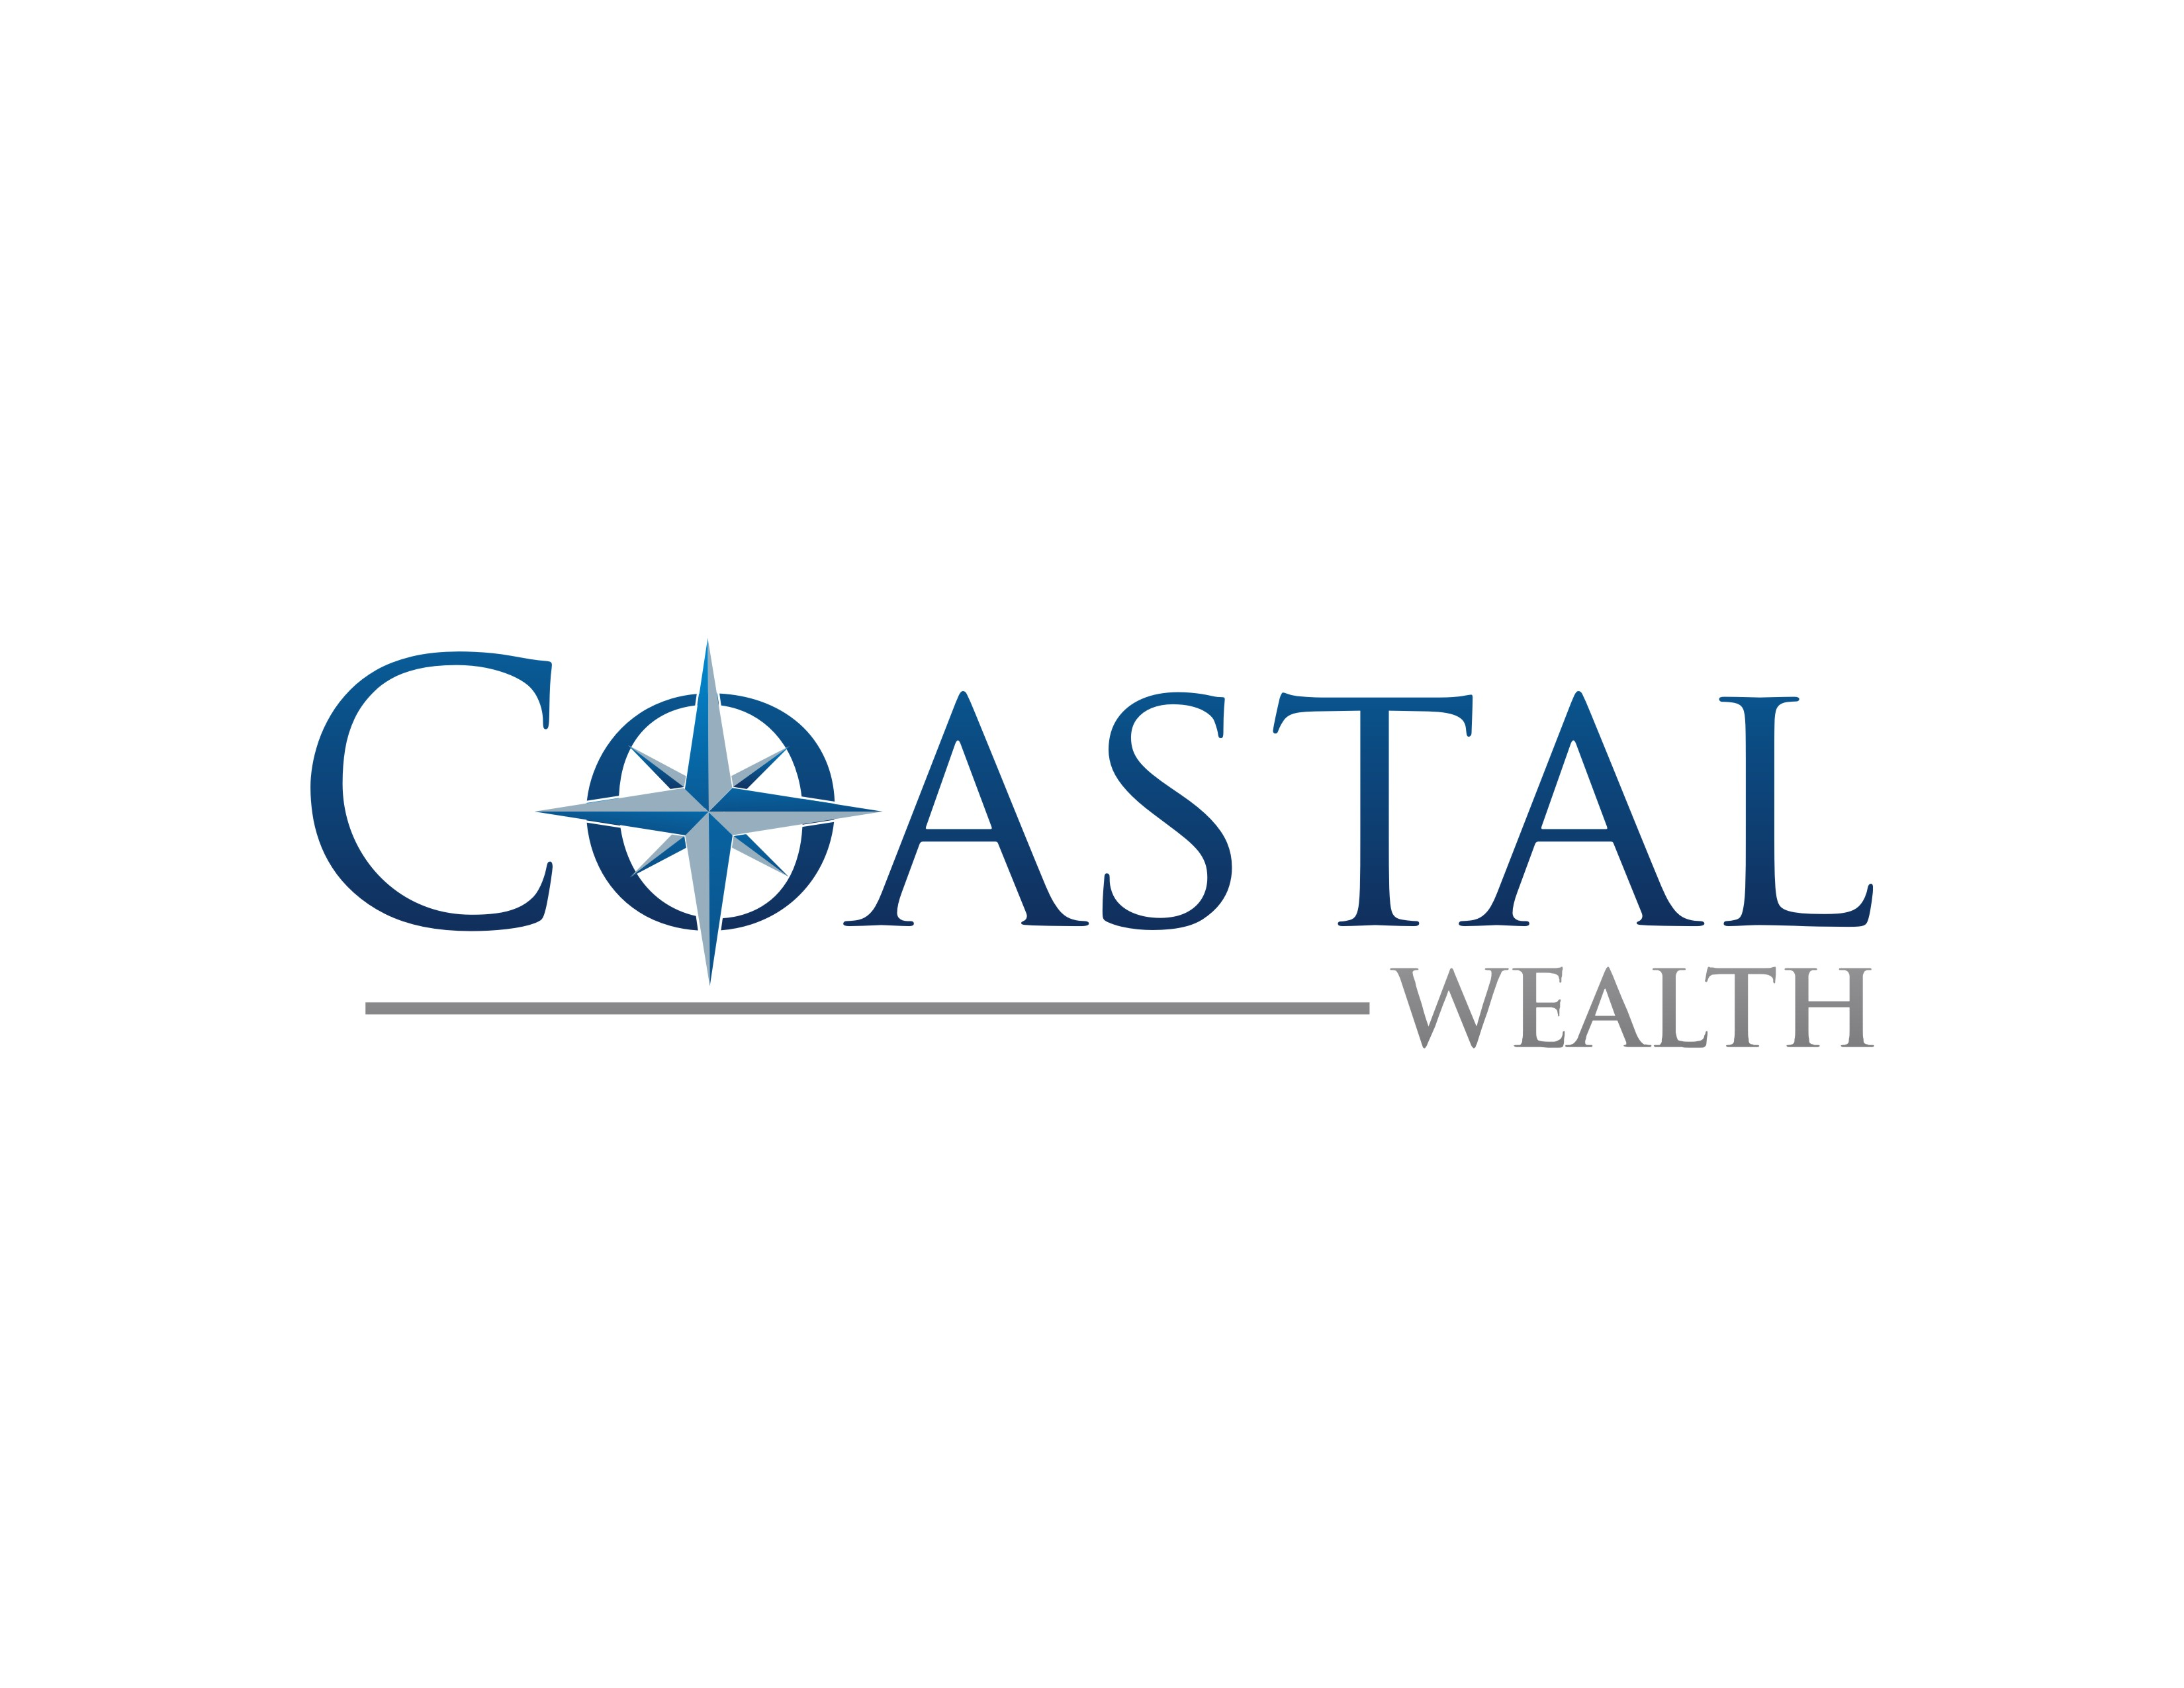 Coastal Wealth logo